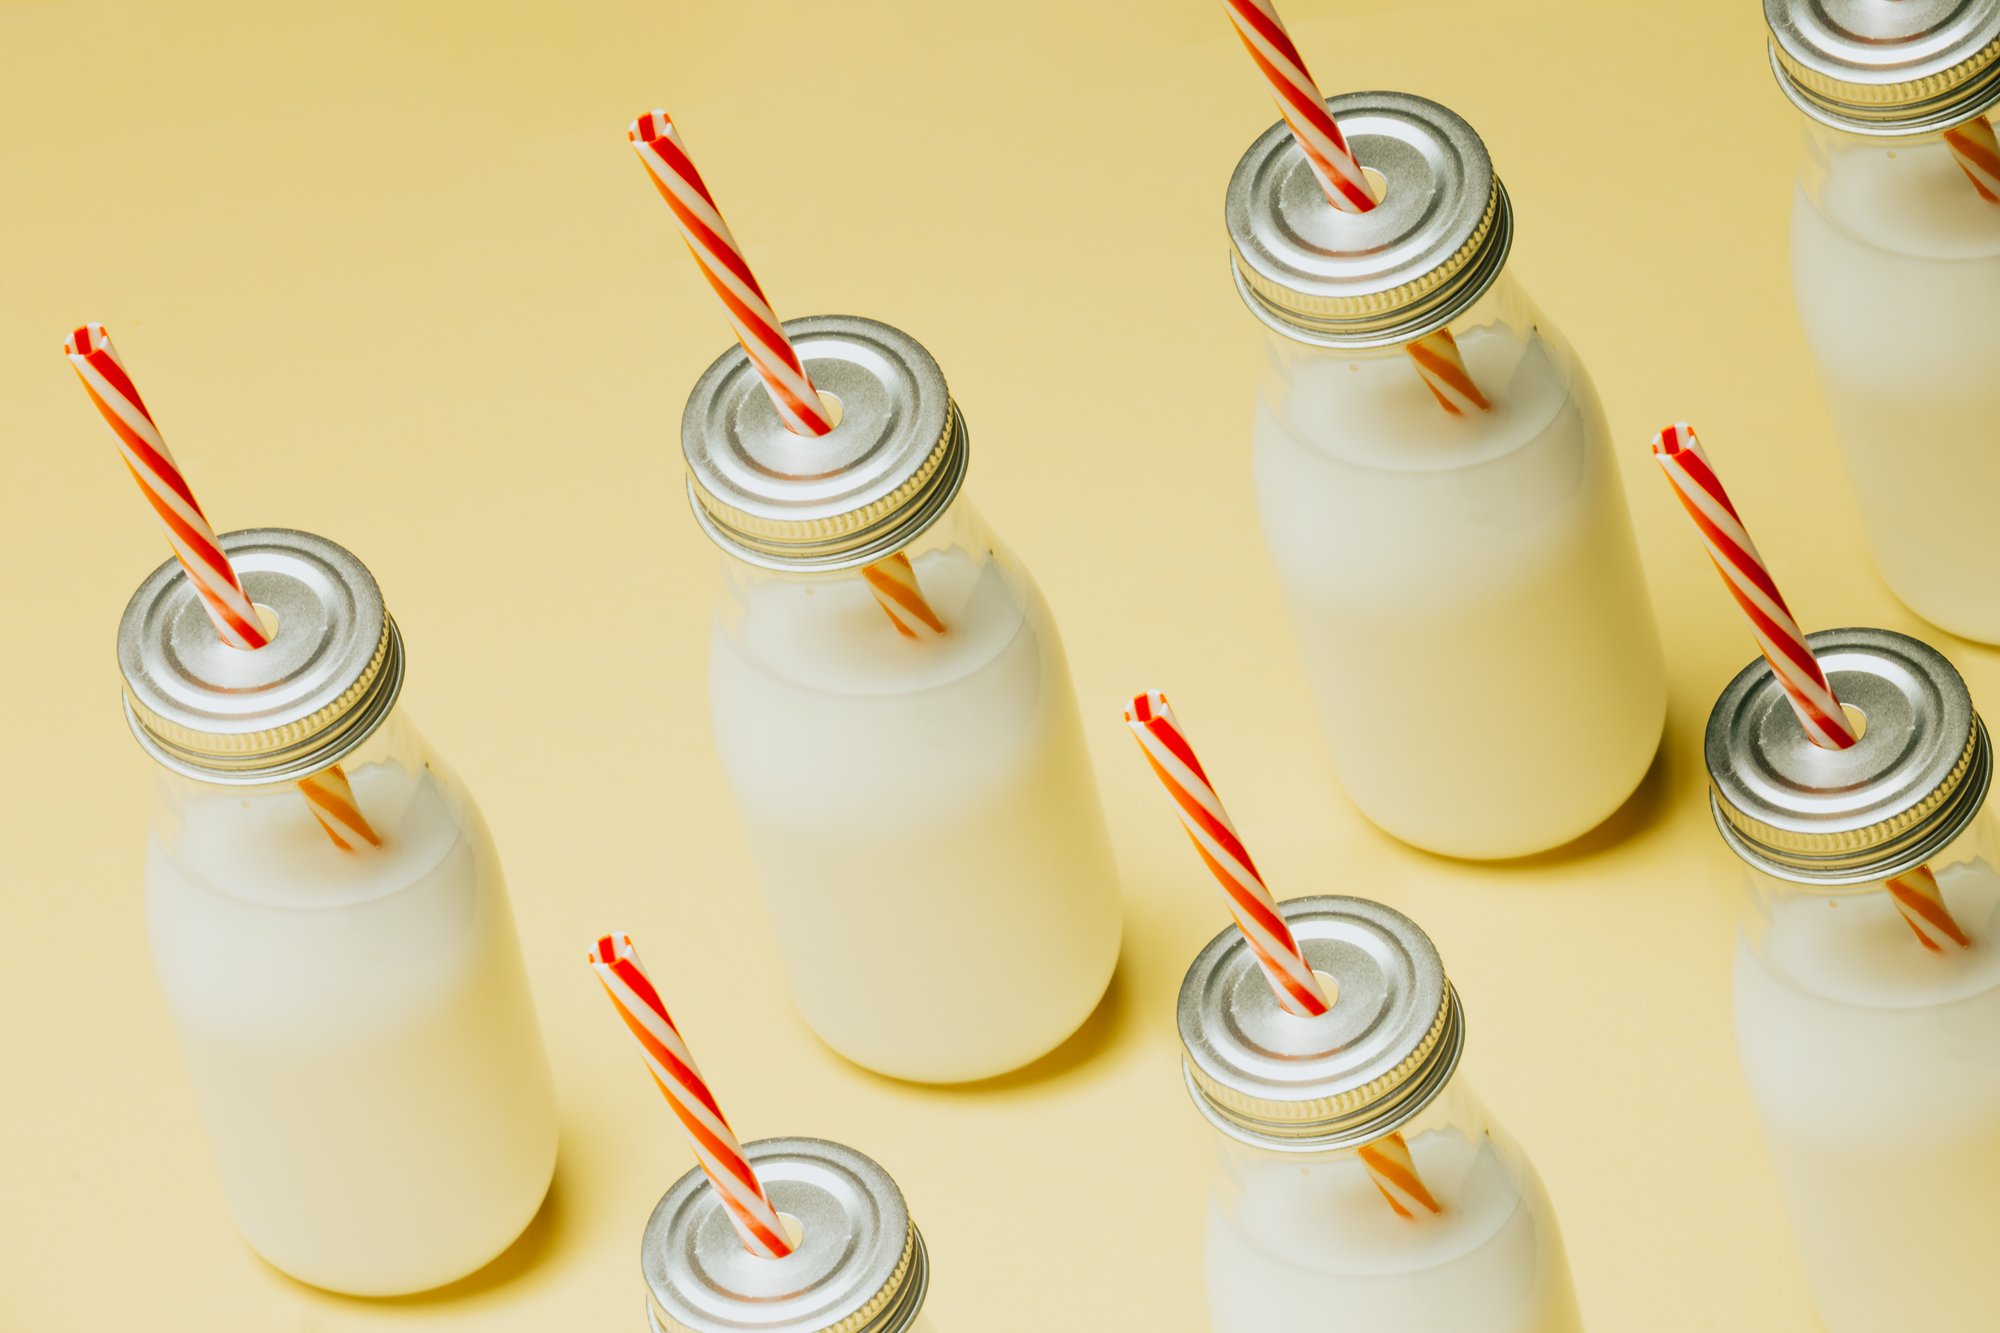 milk bottles with red striped straws on a yellow surface 黄色表面有红色条纹吸管的奶瓶